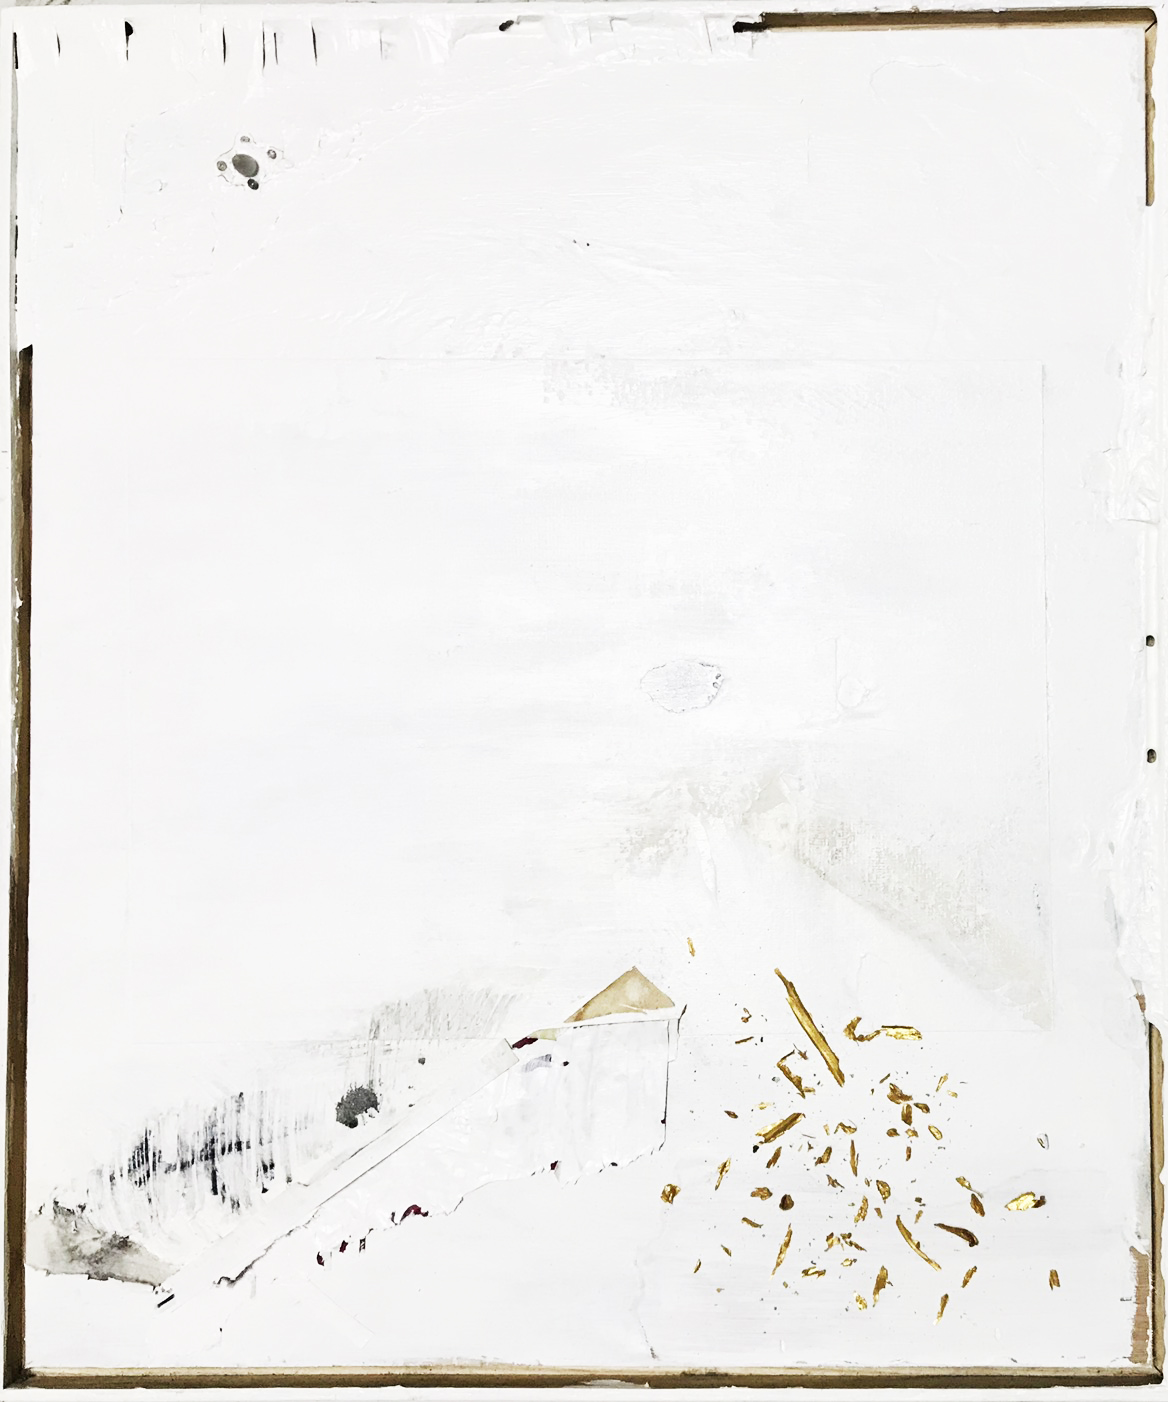 許炯 Xu Jiong, 山水 Shanshui, 2015-2020, 木板丙烯繪畫綜合材料拼貼 acrylic, mixed media collage on wooden board, 52 x 44 cm